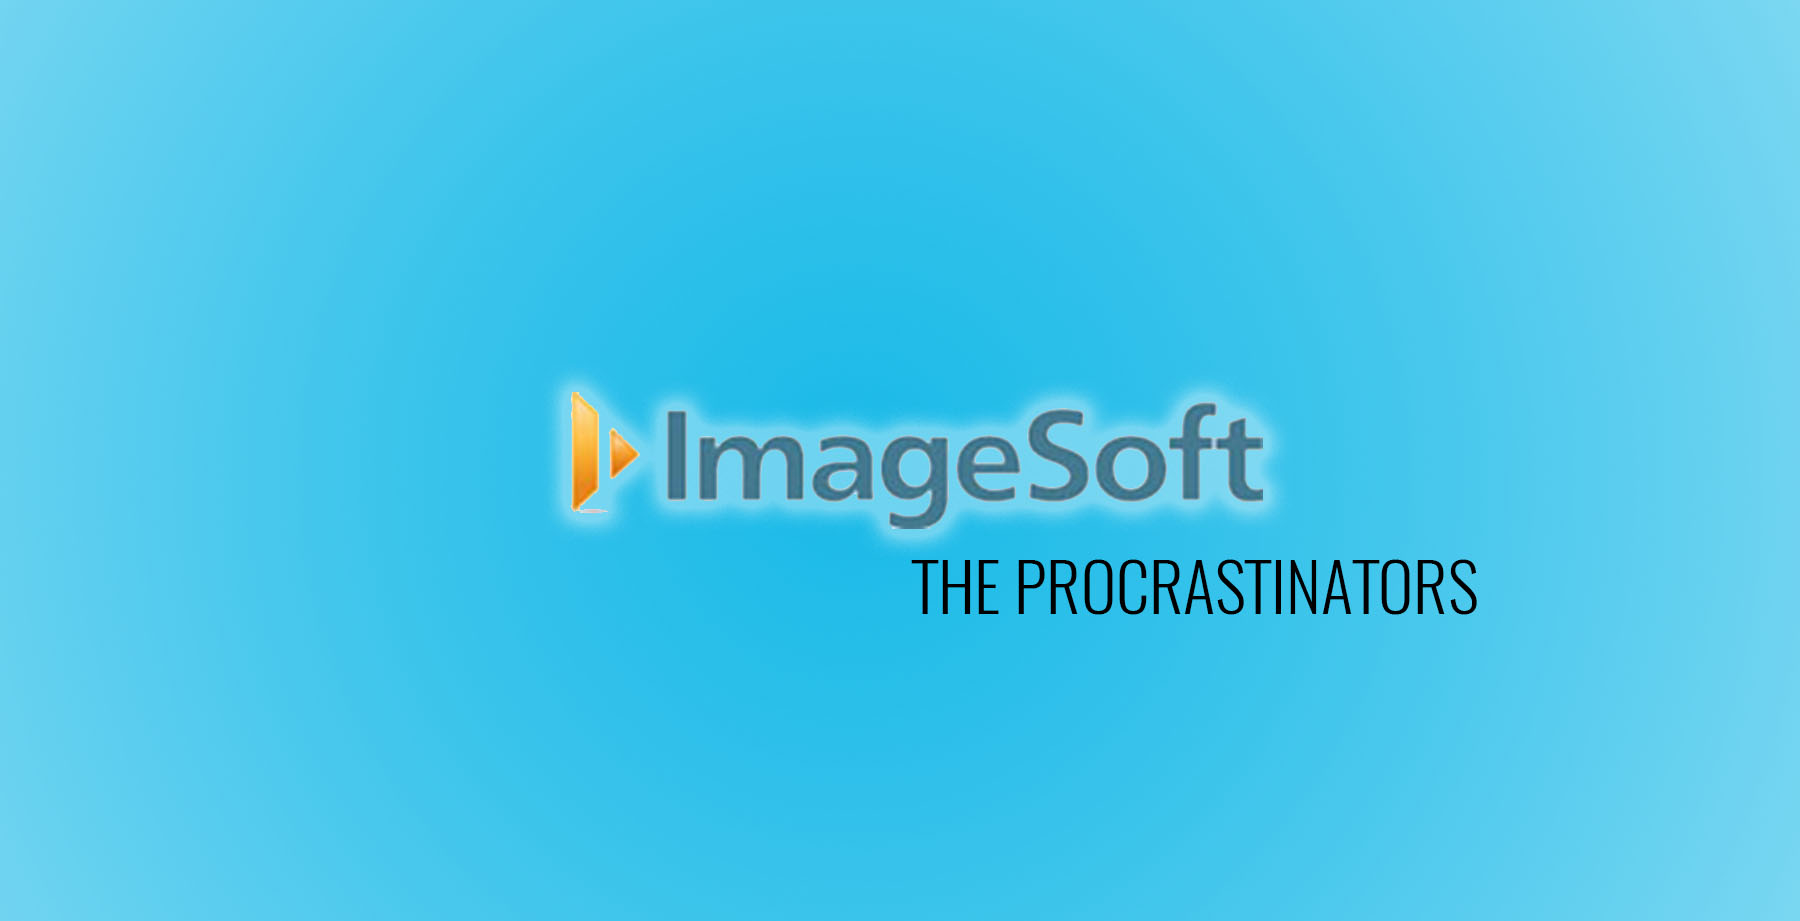 ImageSoft – The Procrastinators